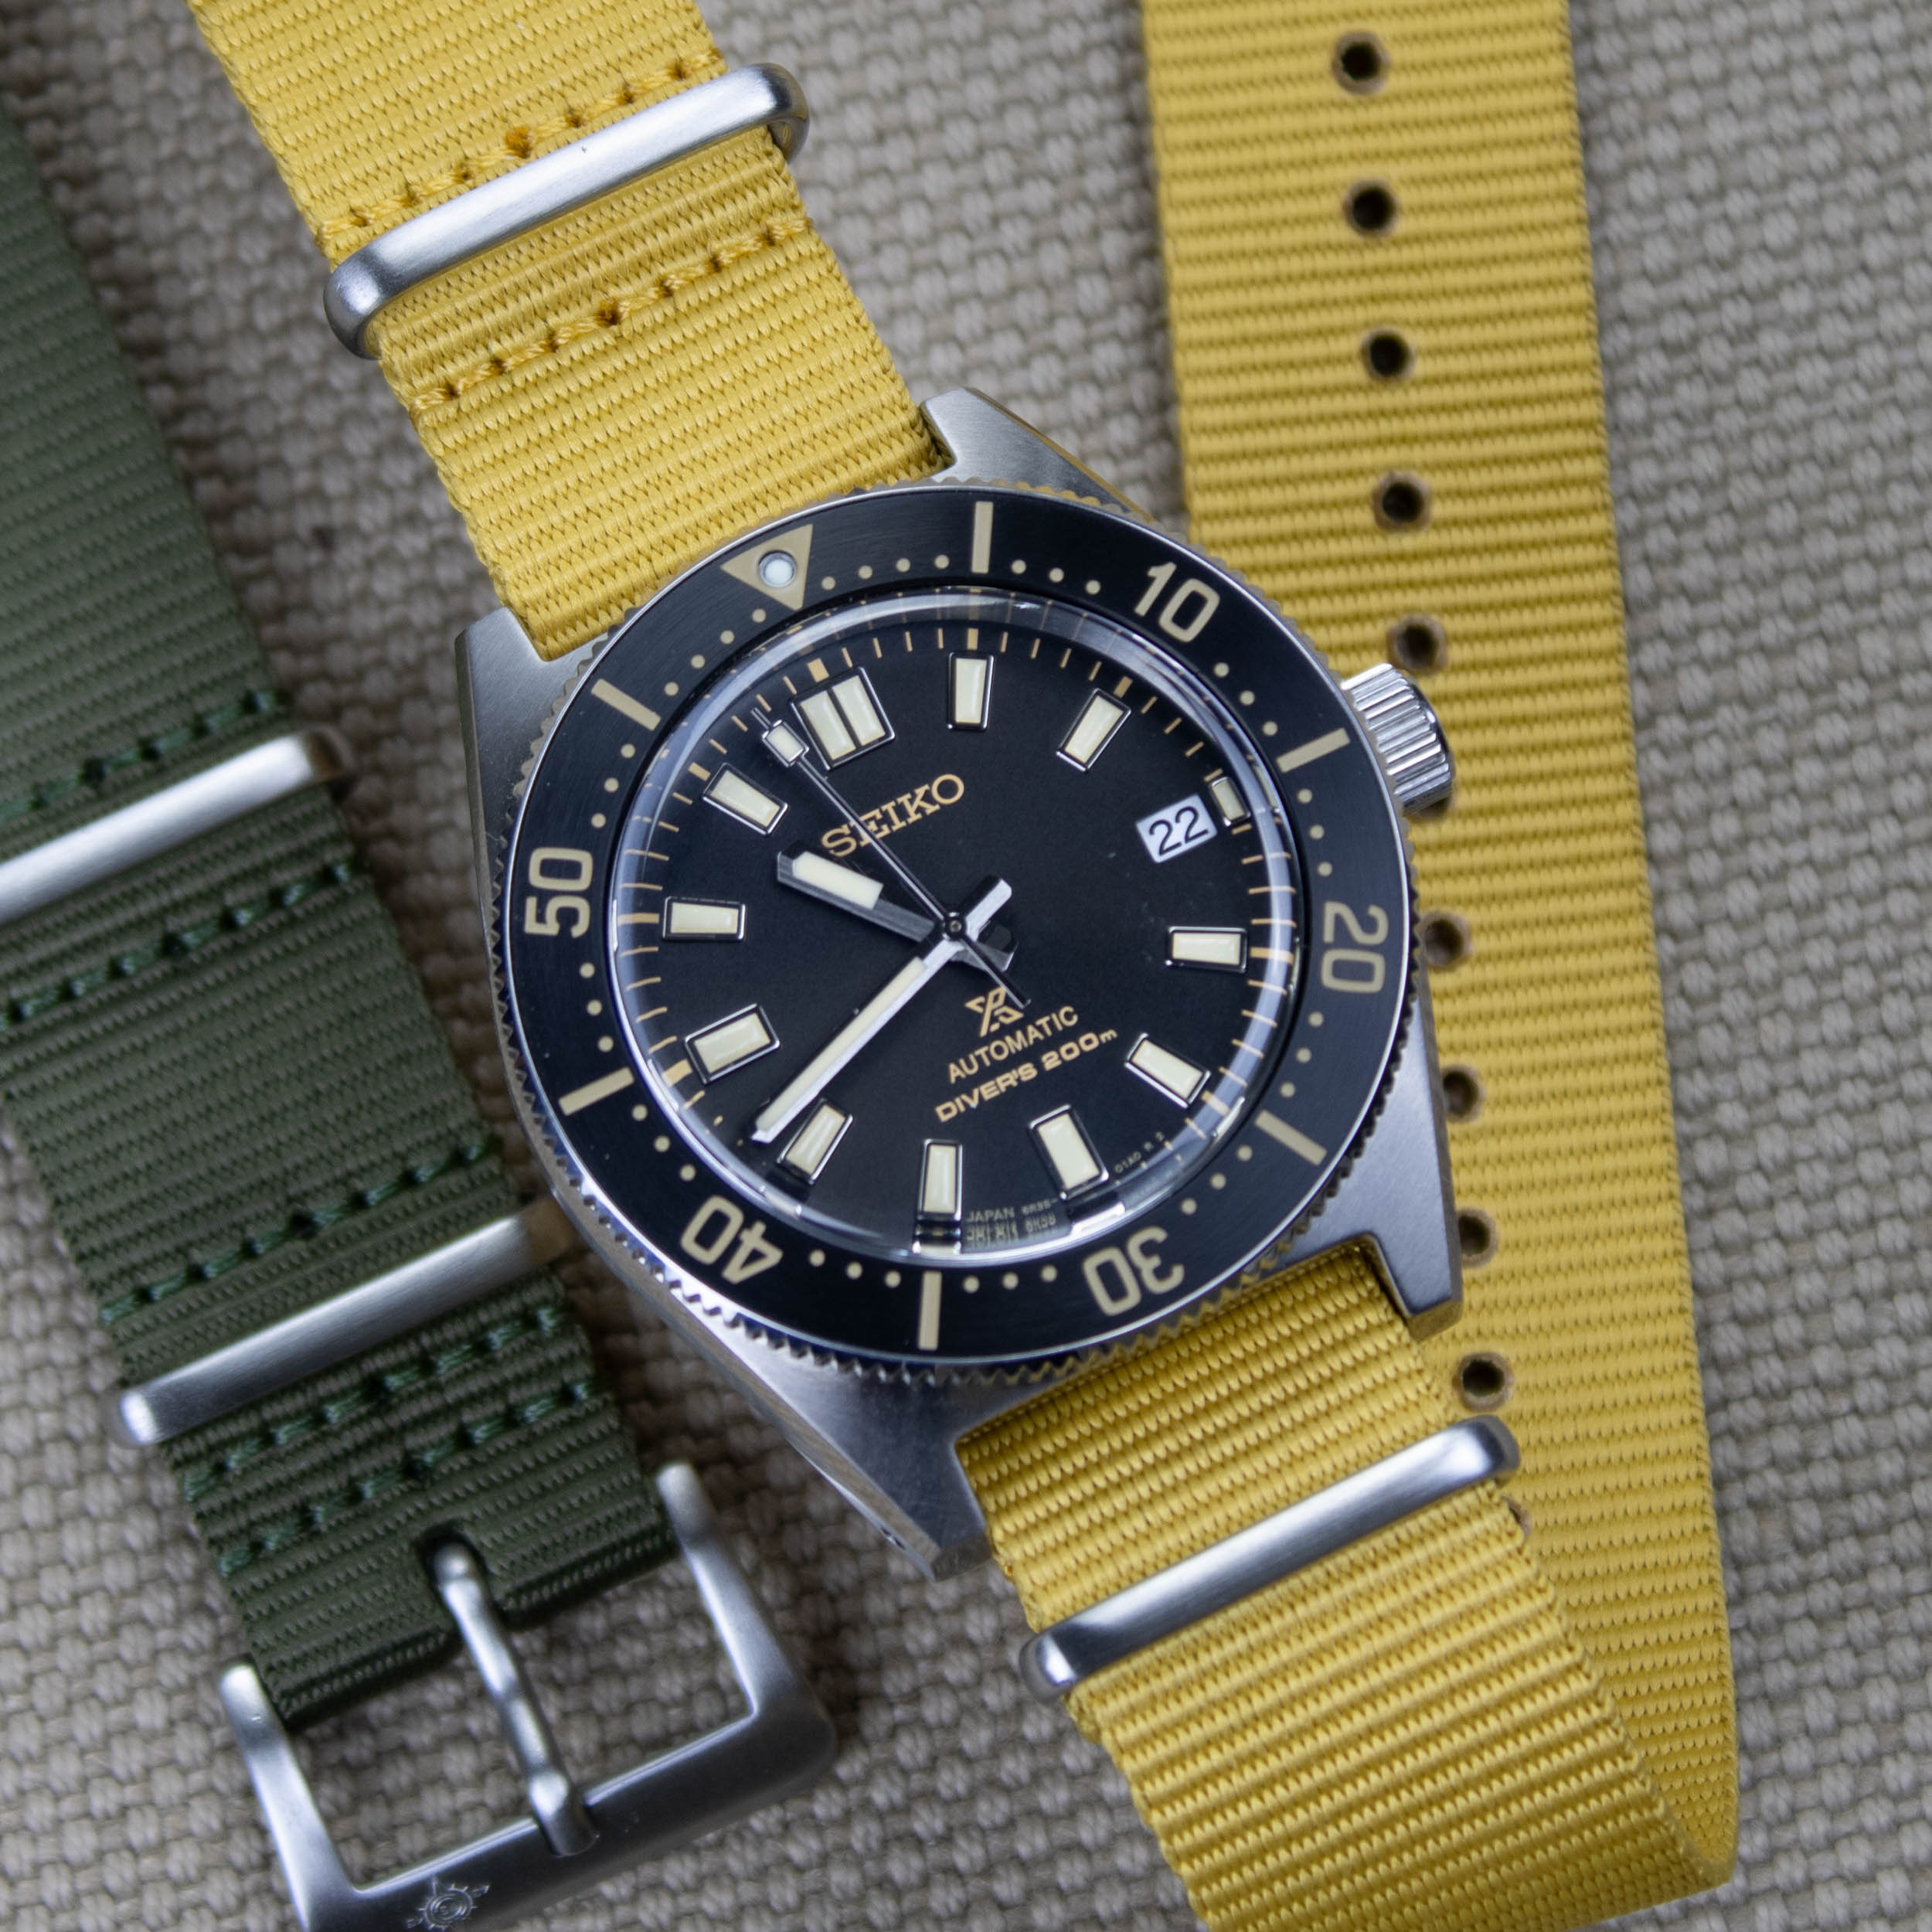 Mustard yellow nylon strap on a seiko dive watch